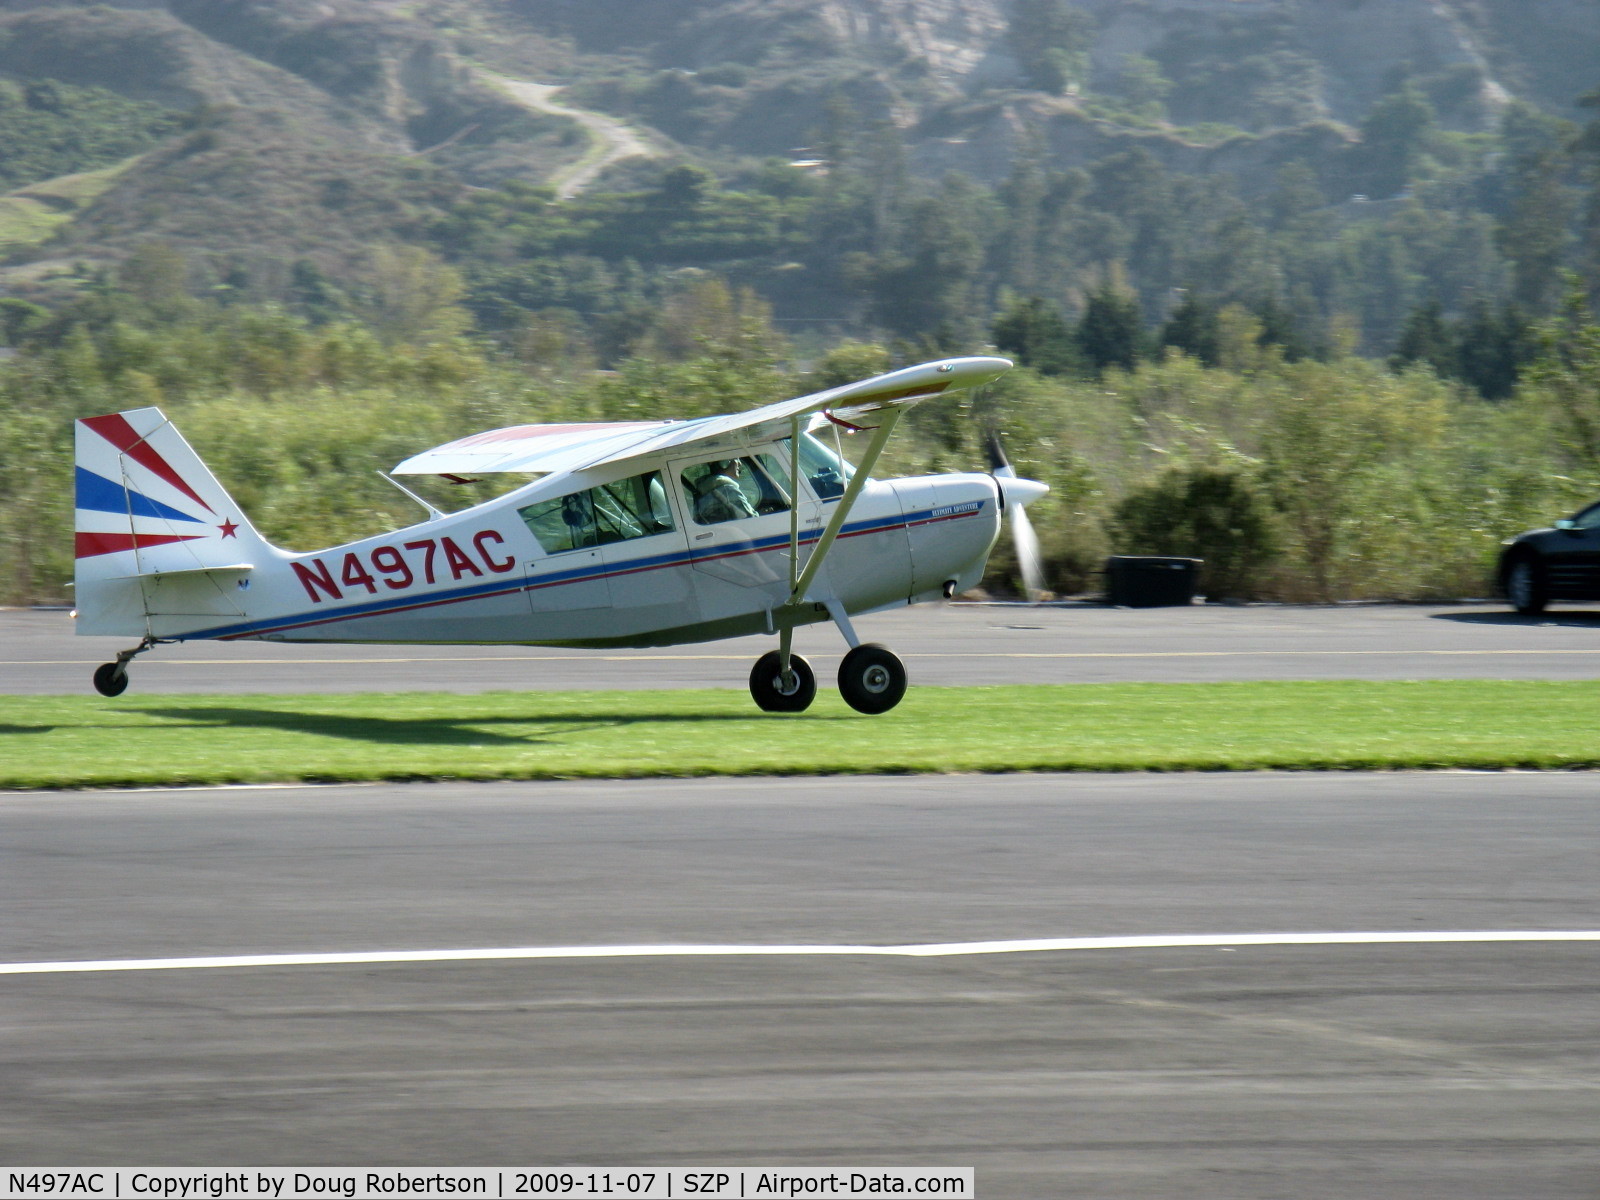 N497AC, 2005 American Champion 7GCAA Citabria C/N 497-2005, 2005 American Champion 7GCAA ADVENTURE, Superior O-360 180 Hp upgrade, takeoff on the grass strip